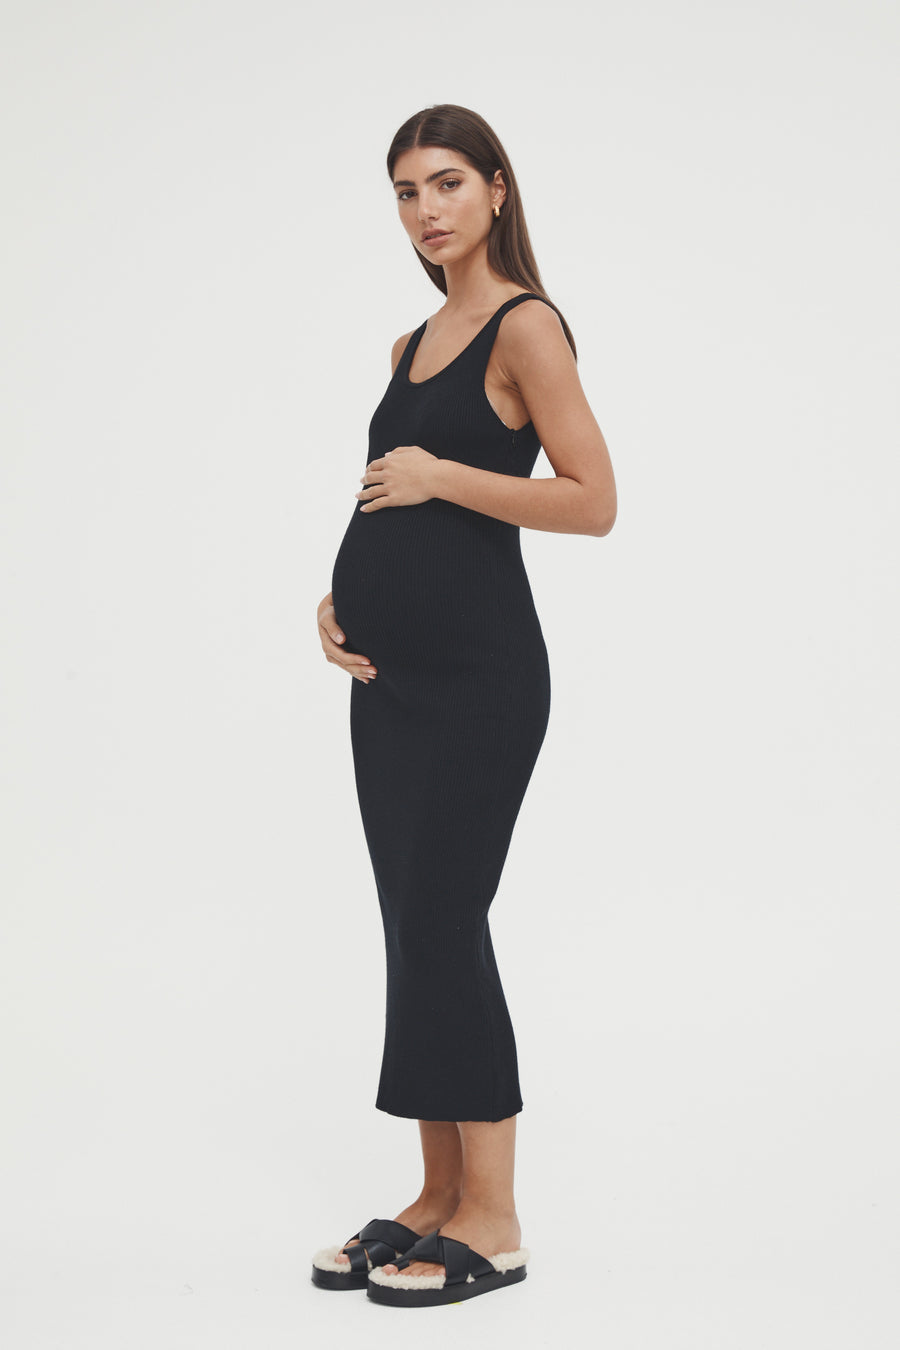 Stretchy Rib Knit Maternity Dress (Black) 4